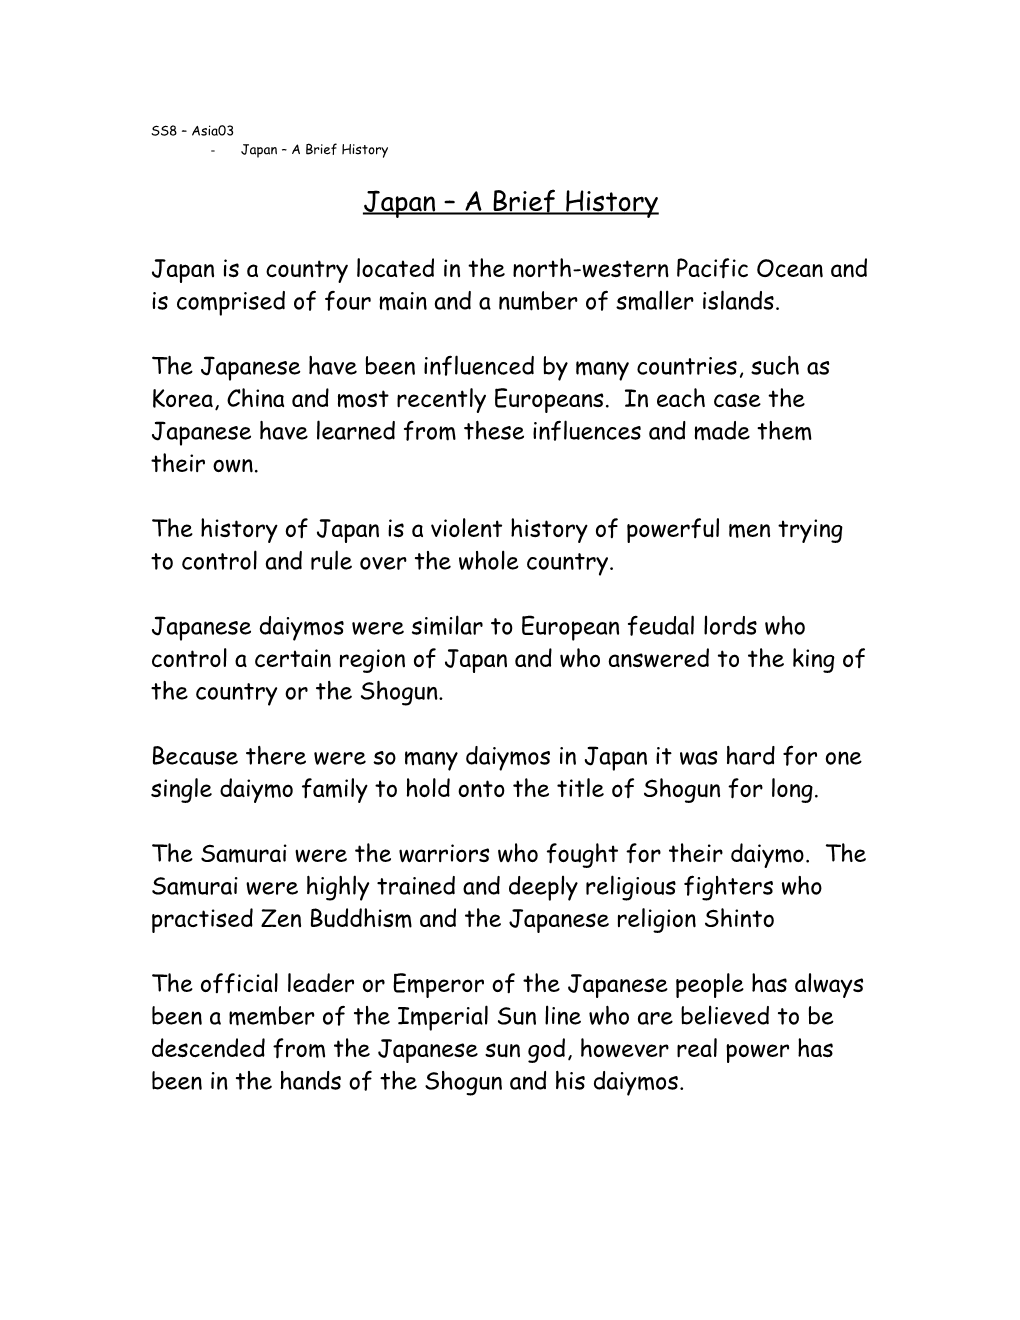 Japan a Brief History